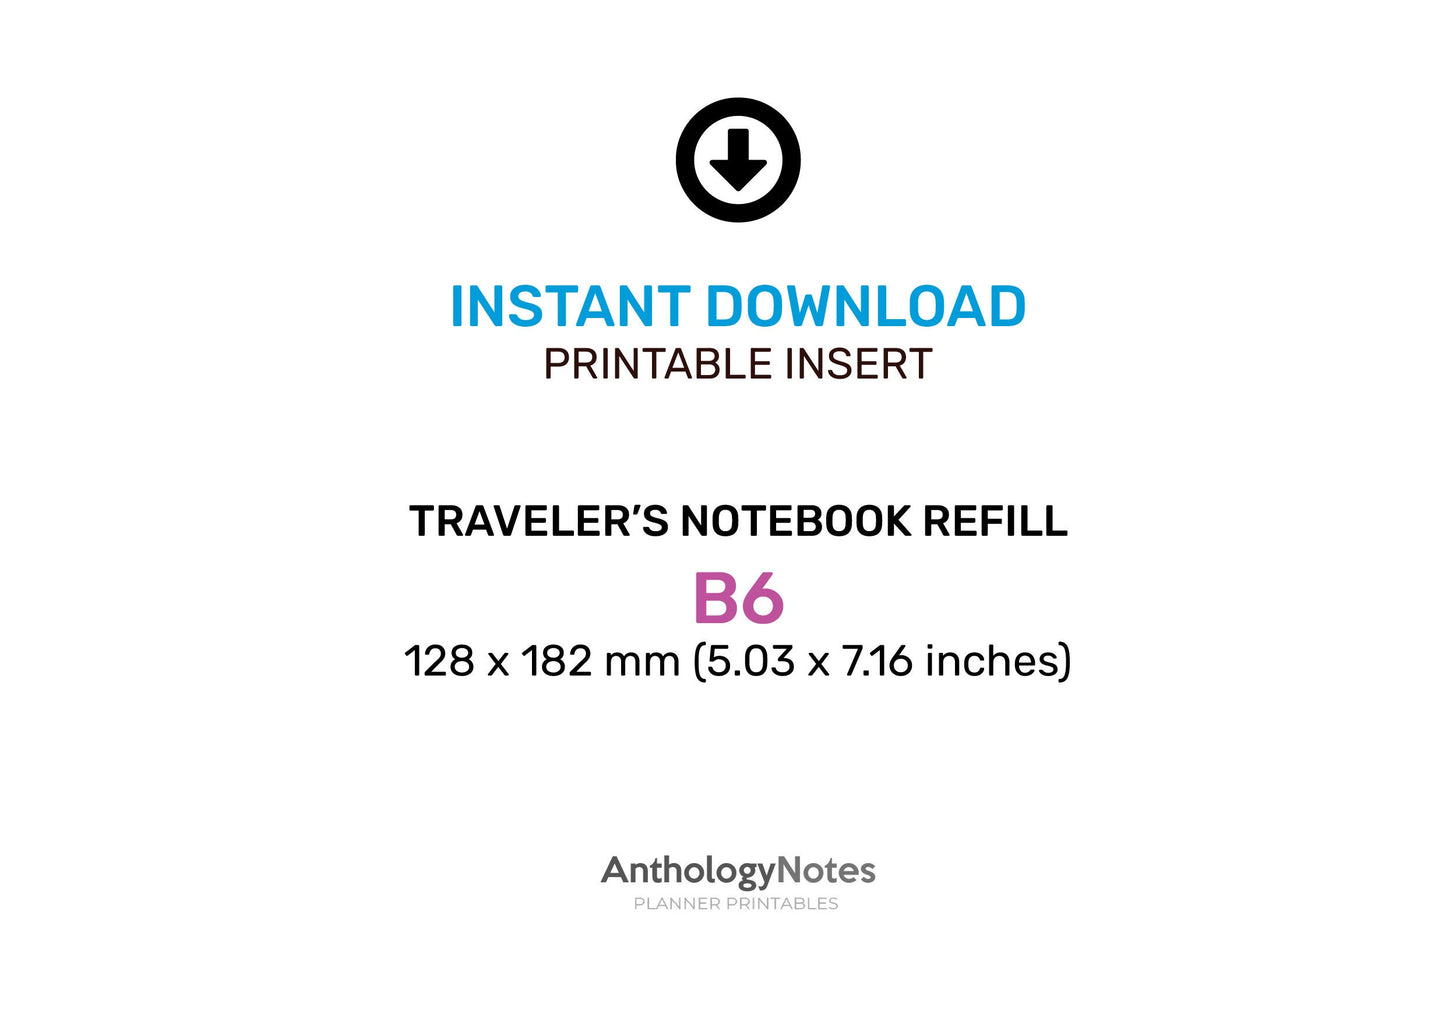 B6 Daily JIBUN-Inspired Printable Traveler's Notebook Insert Minimalist GRID B6033